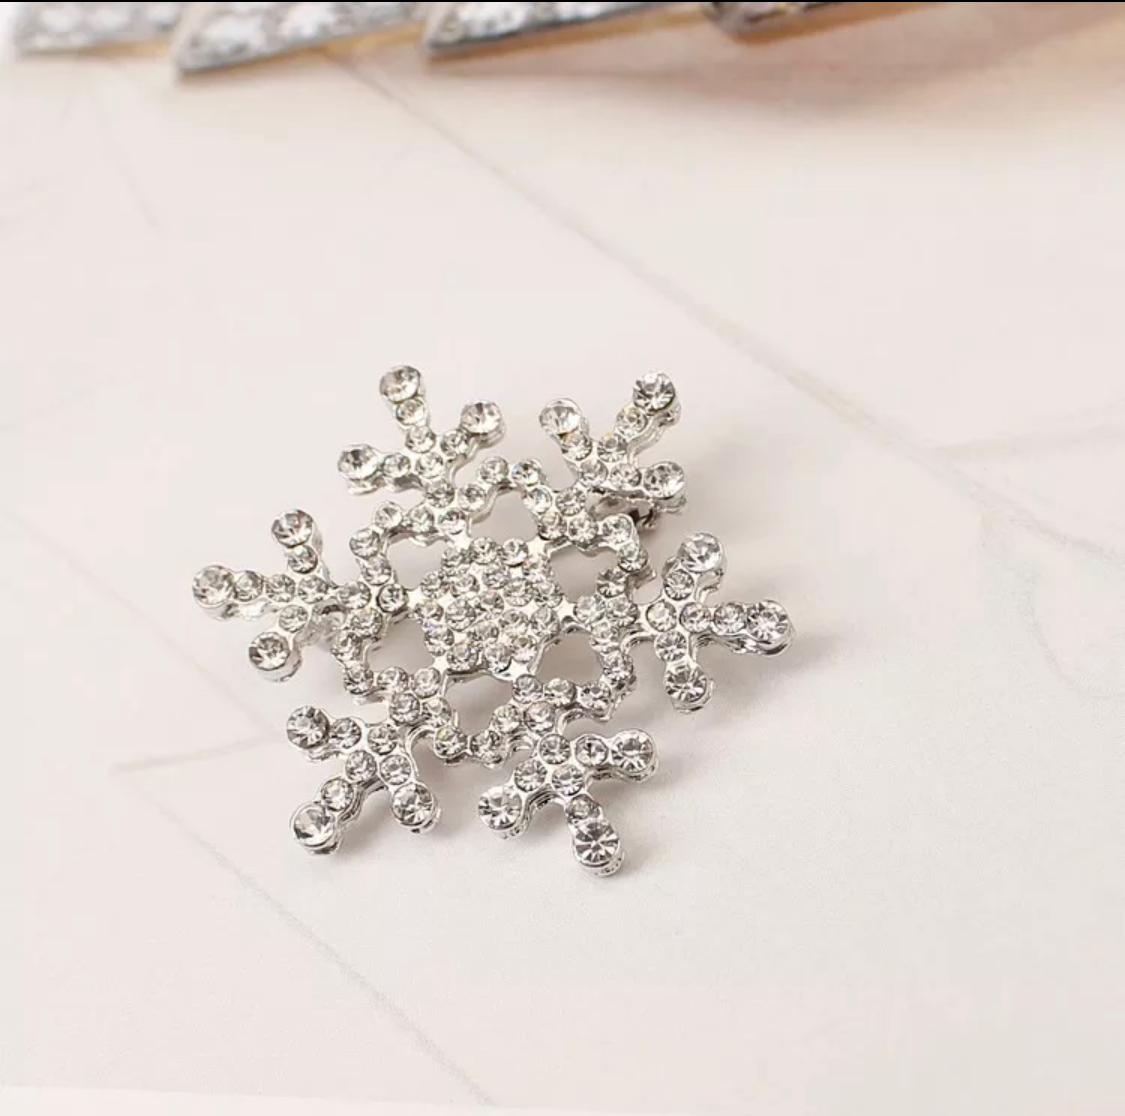 Shiny Crystal Snowflake Women Fashion Brooch Pin Silver